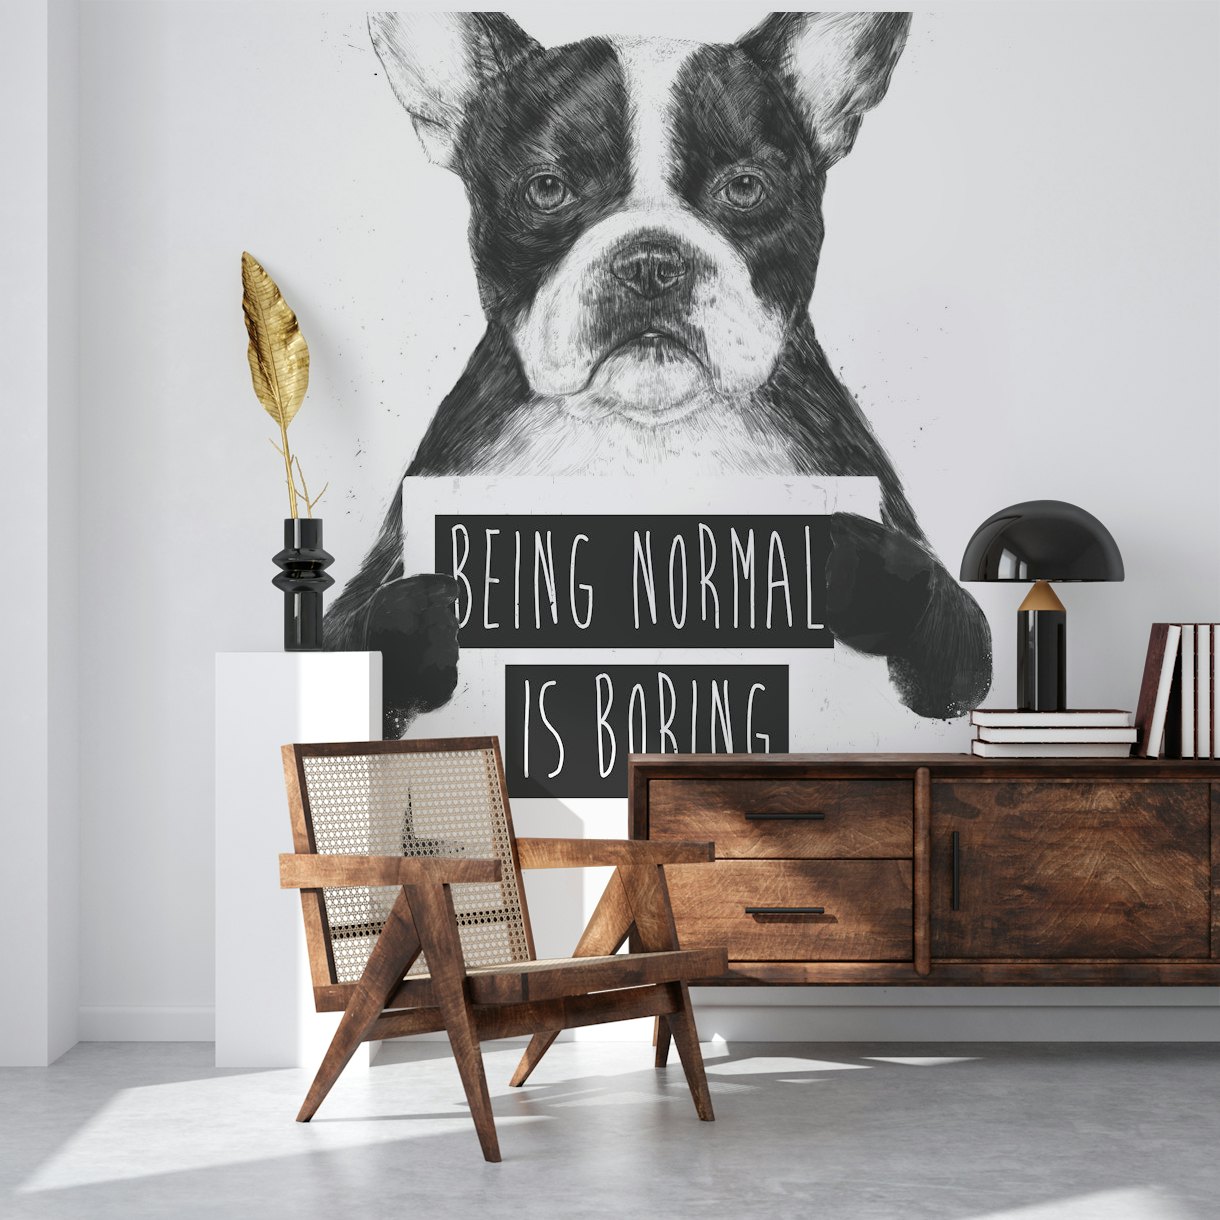 Being normal is boring wallpaper